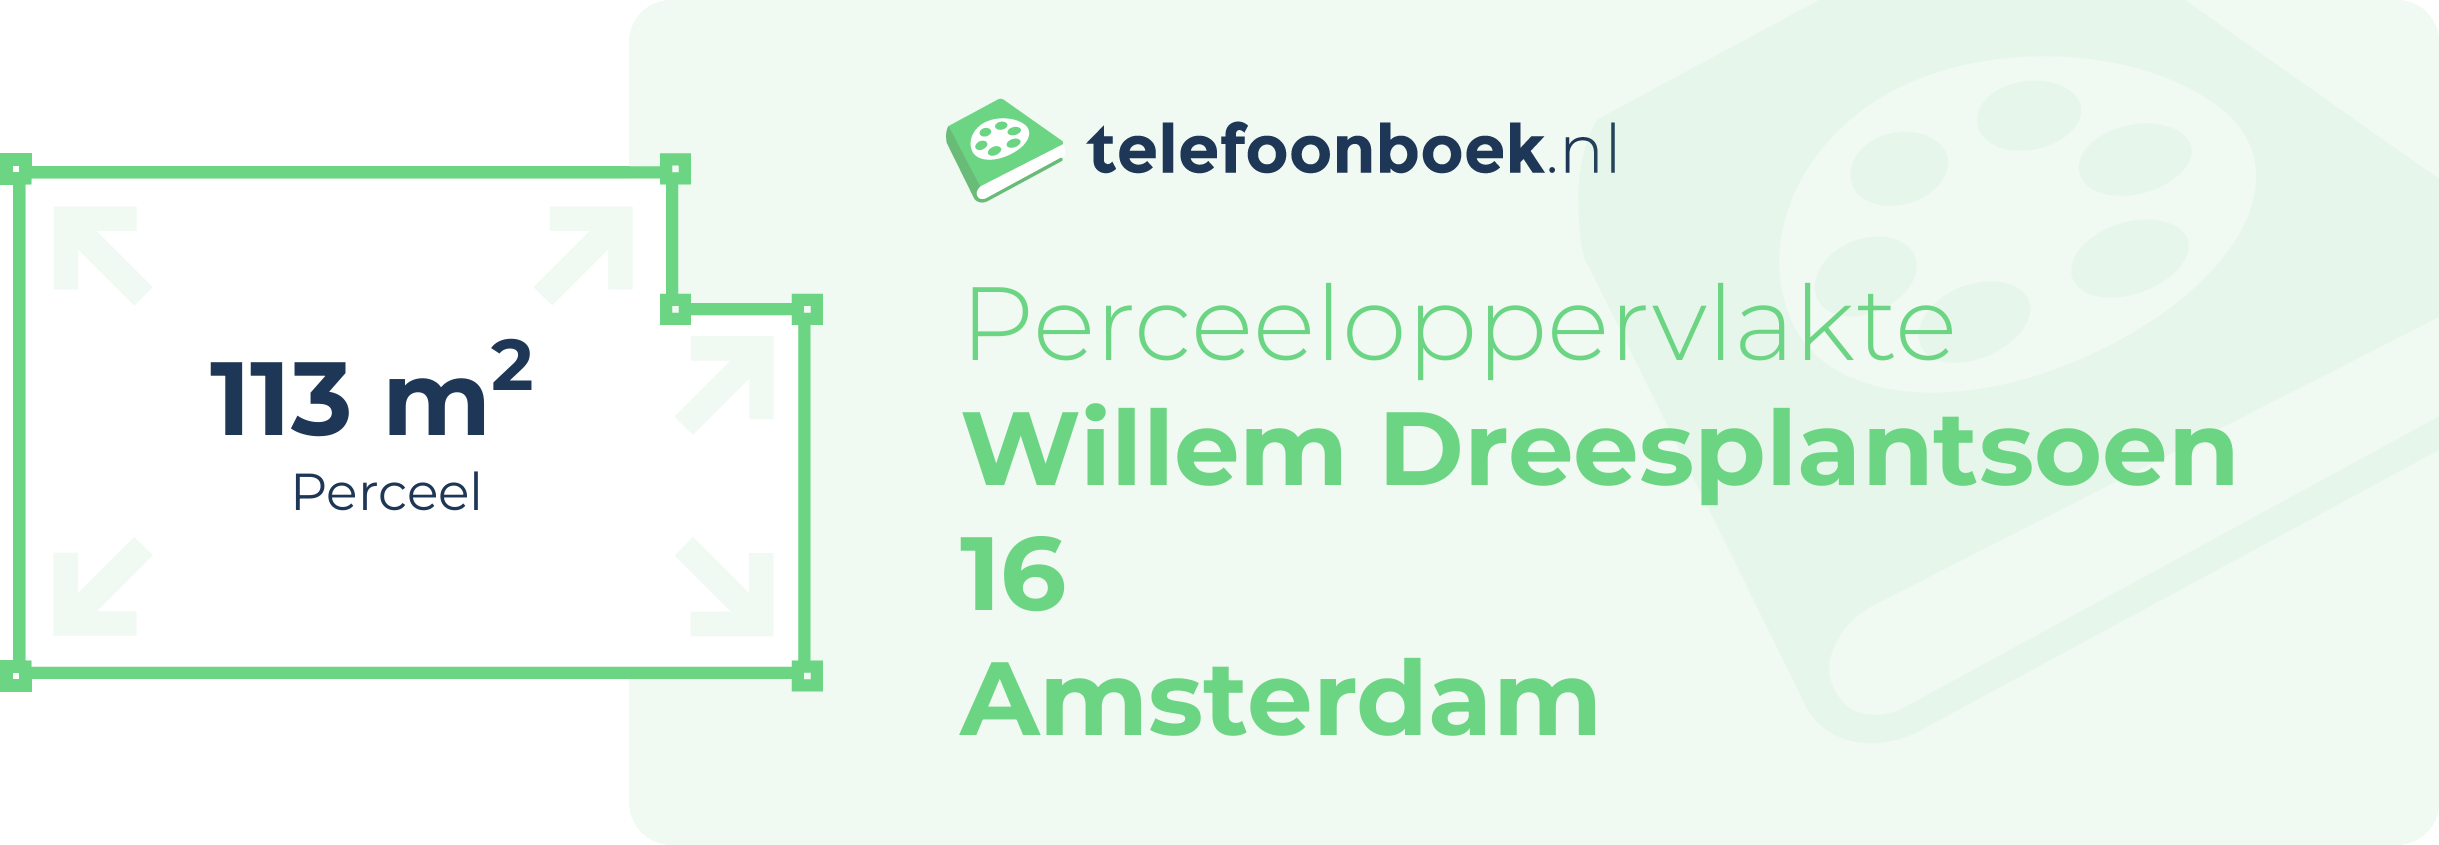 Perceeloppervlakte Willem Dreesplantsoen 16 Amsterdam